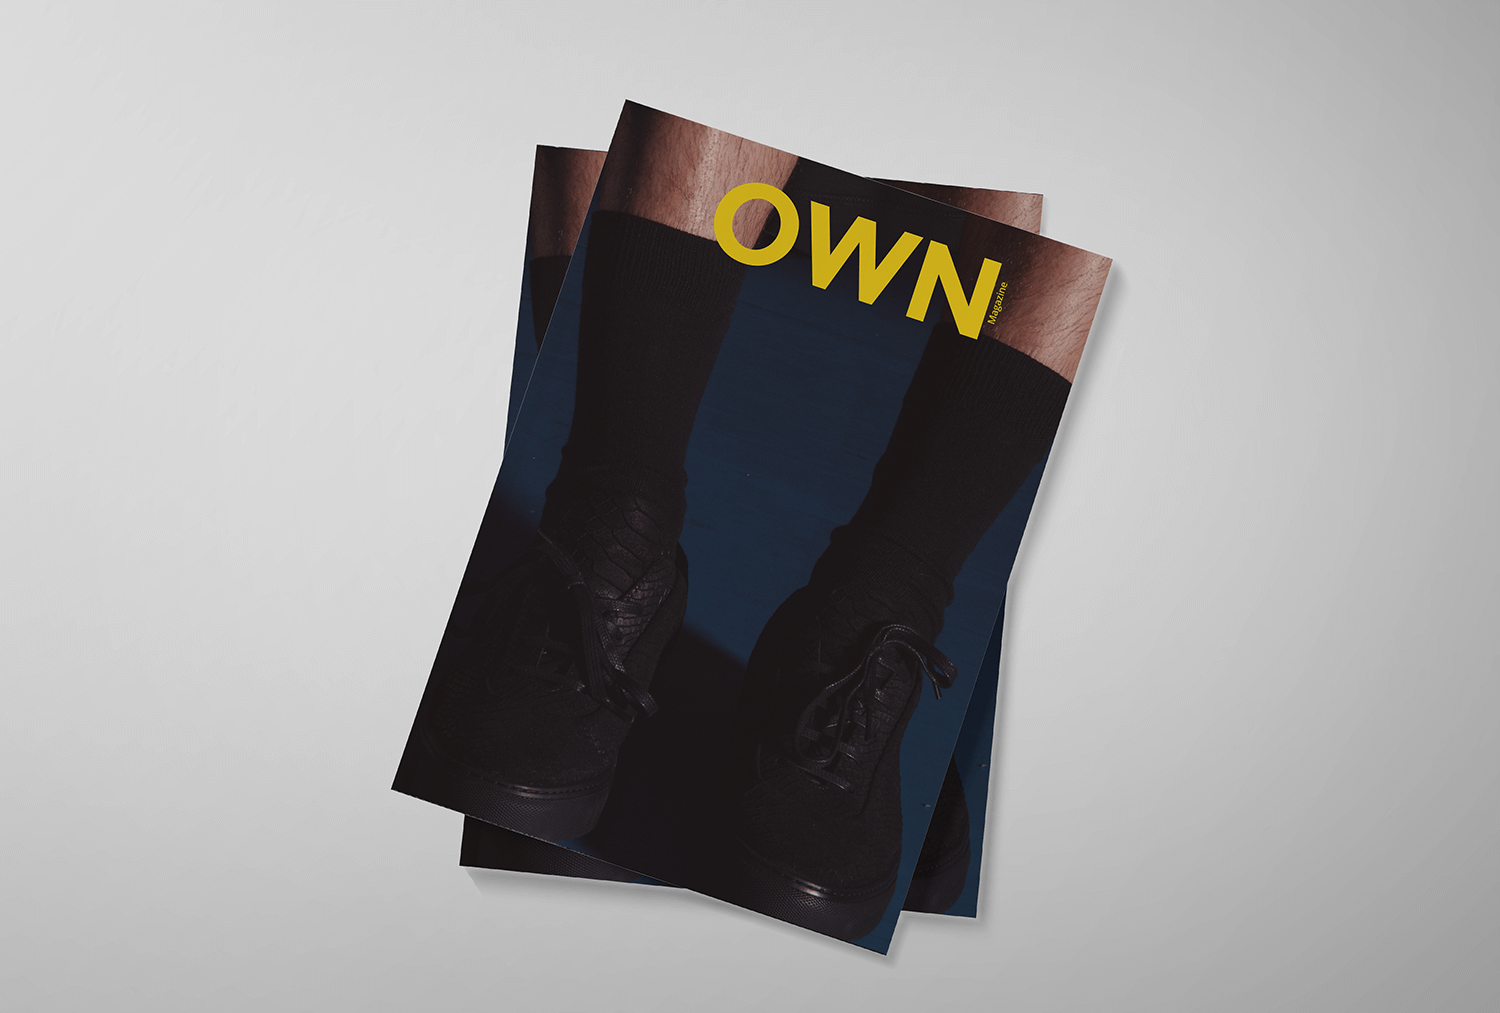 Own magazine